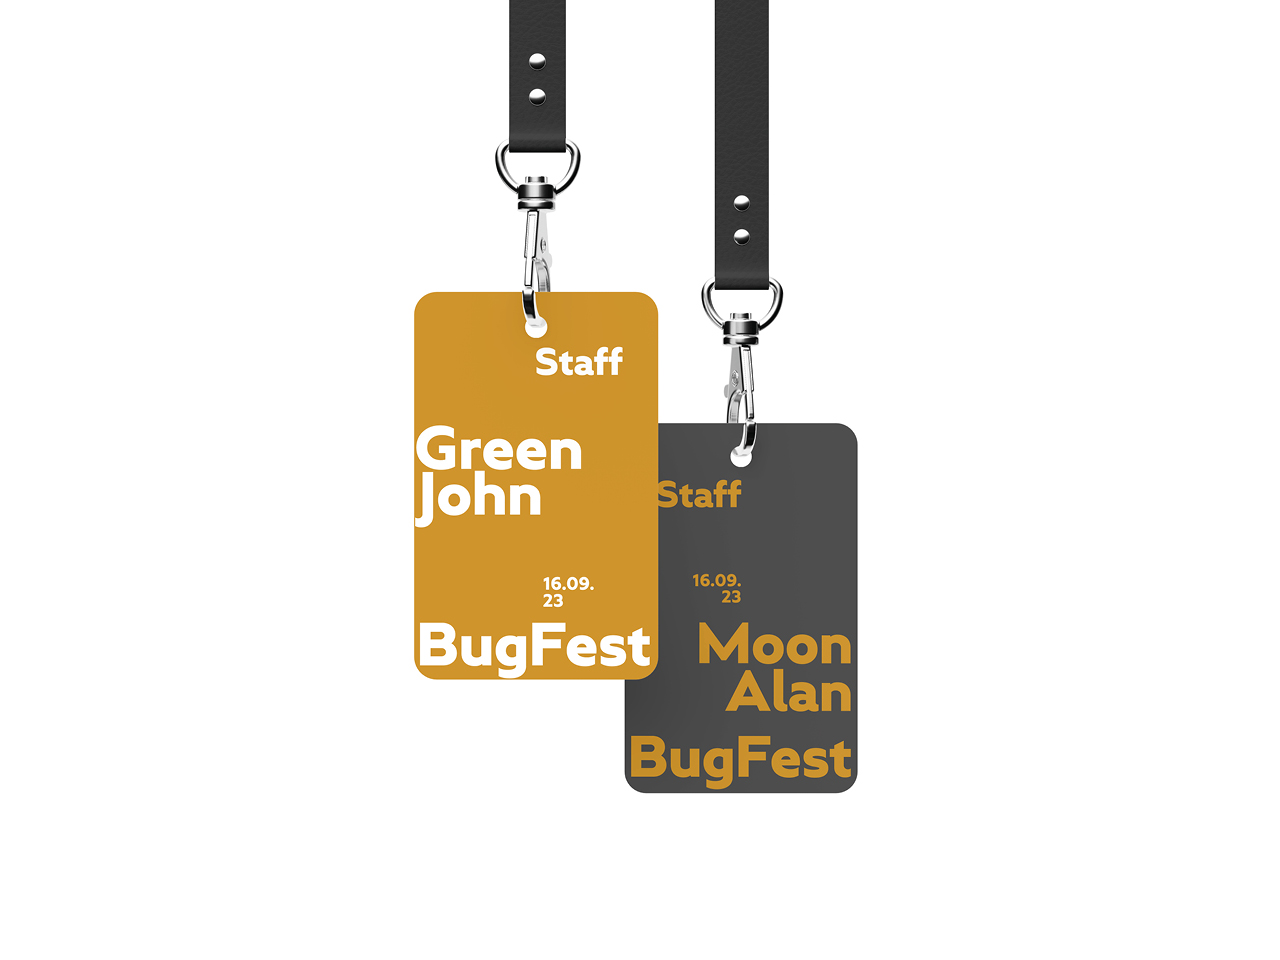 Student Brand Identity Concept For A Bugfest By Yanina Kuznetsova